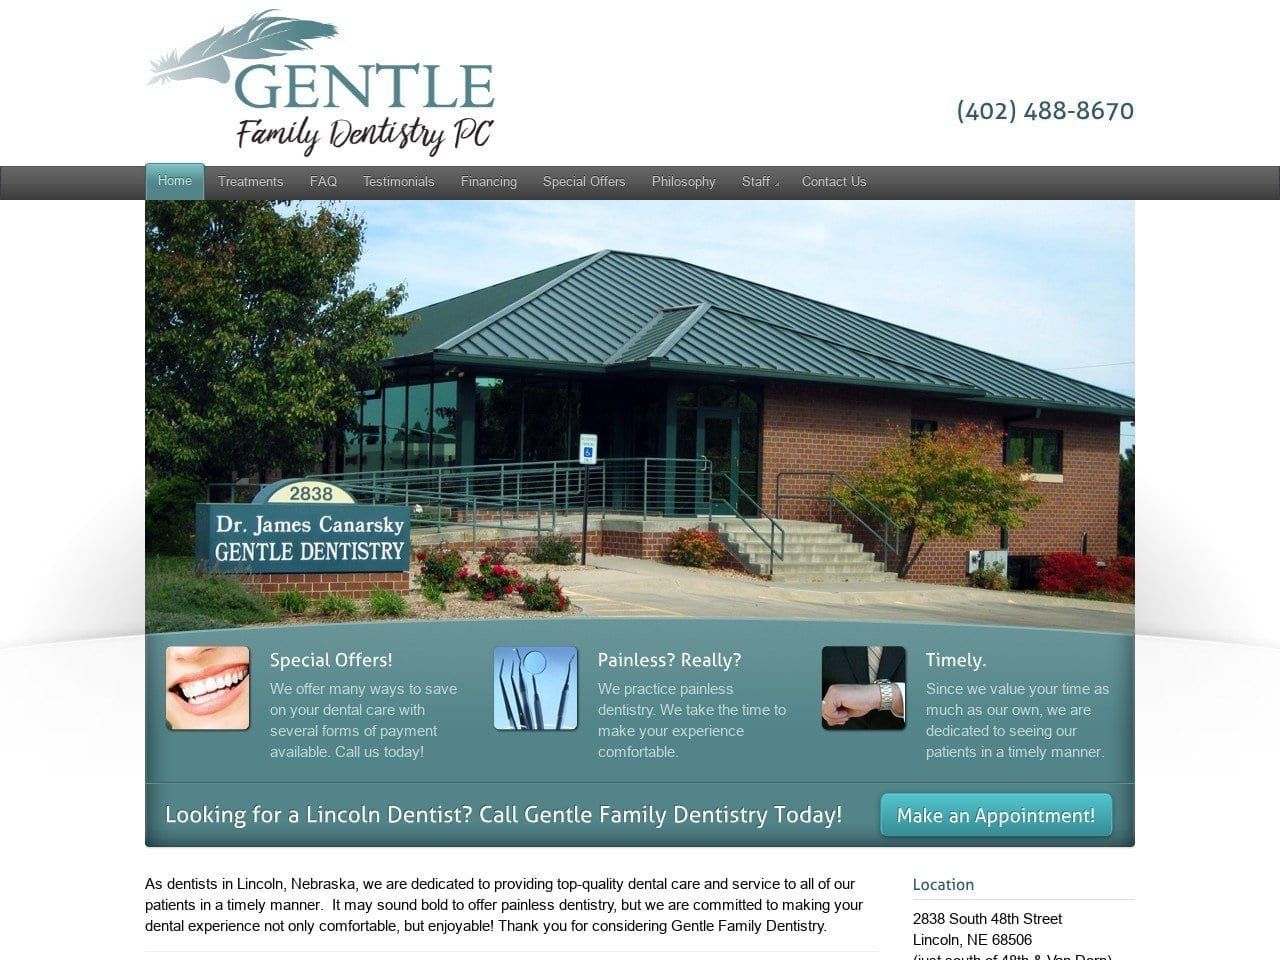 Gentle Family Dentist Website Screenshot from lincolngentledentist.com